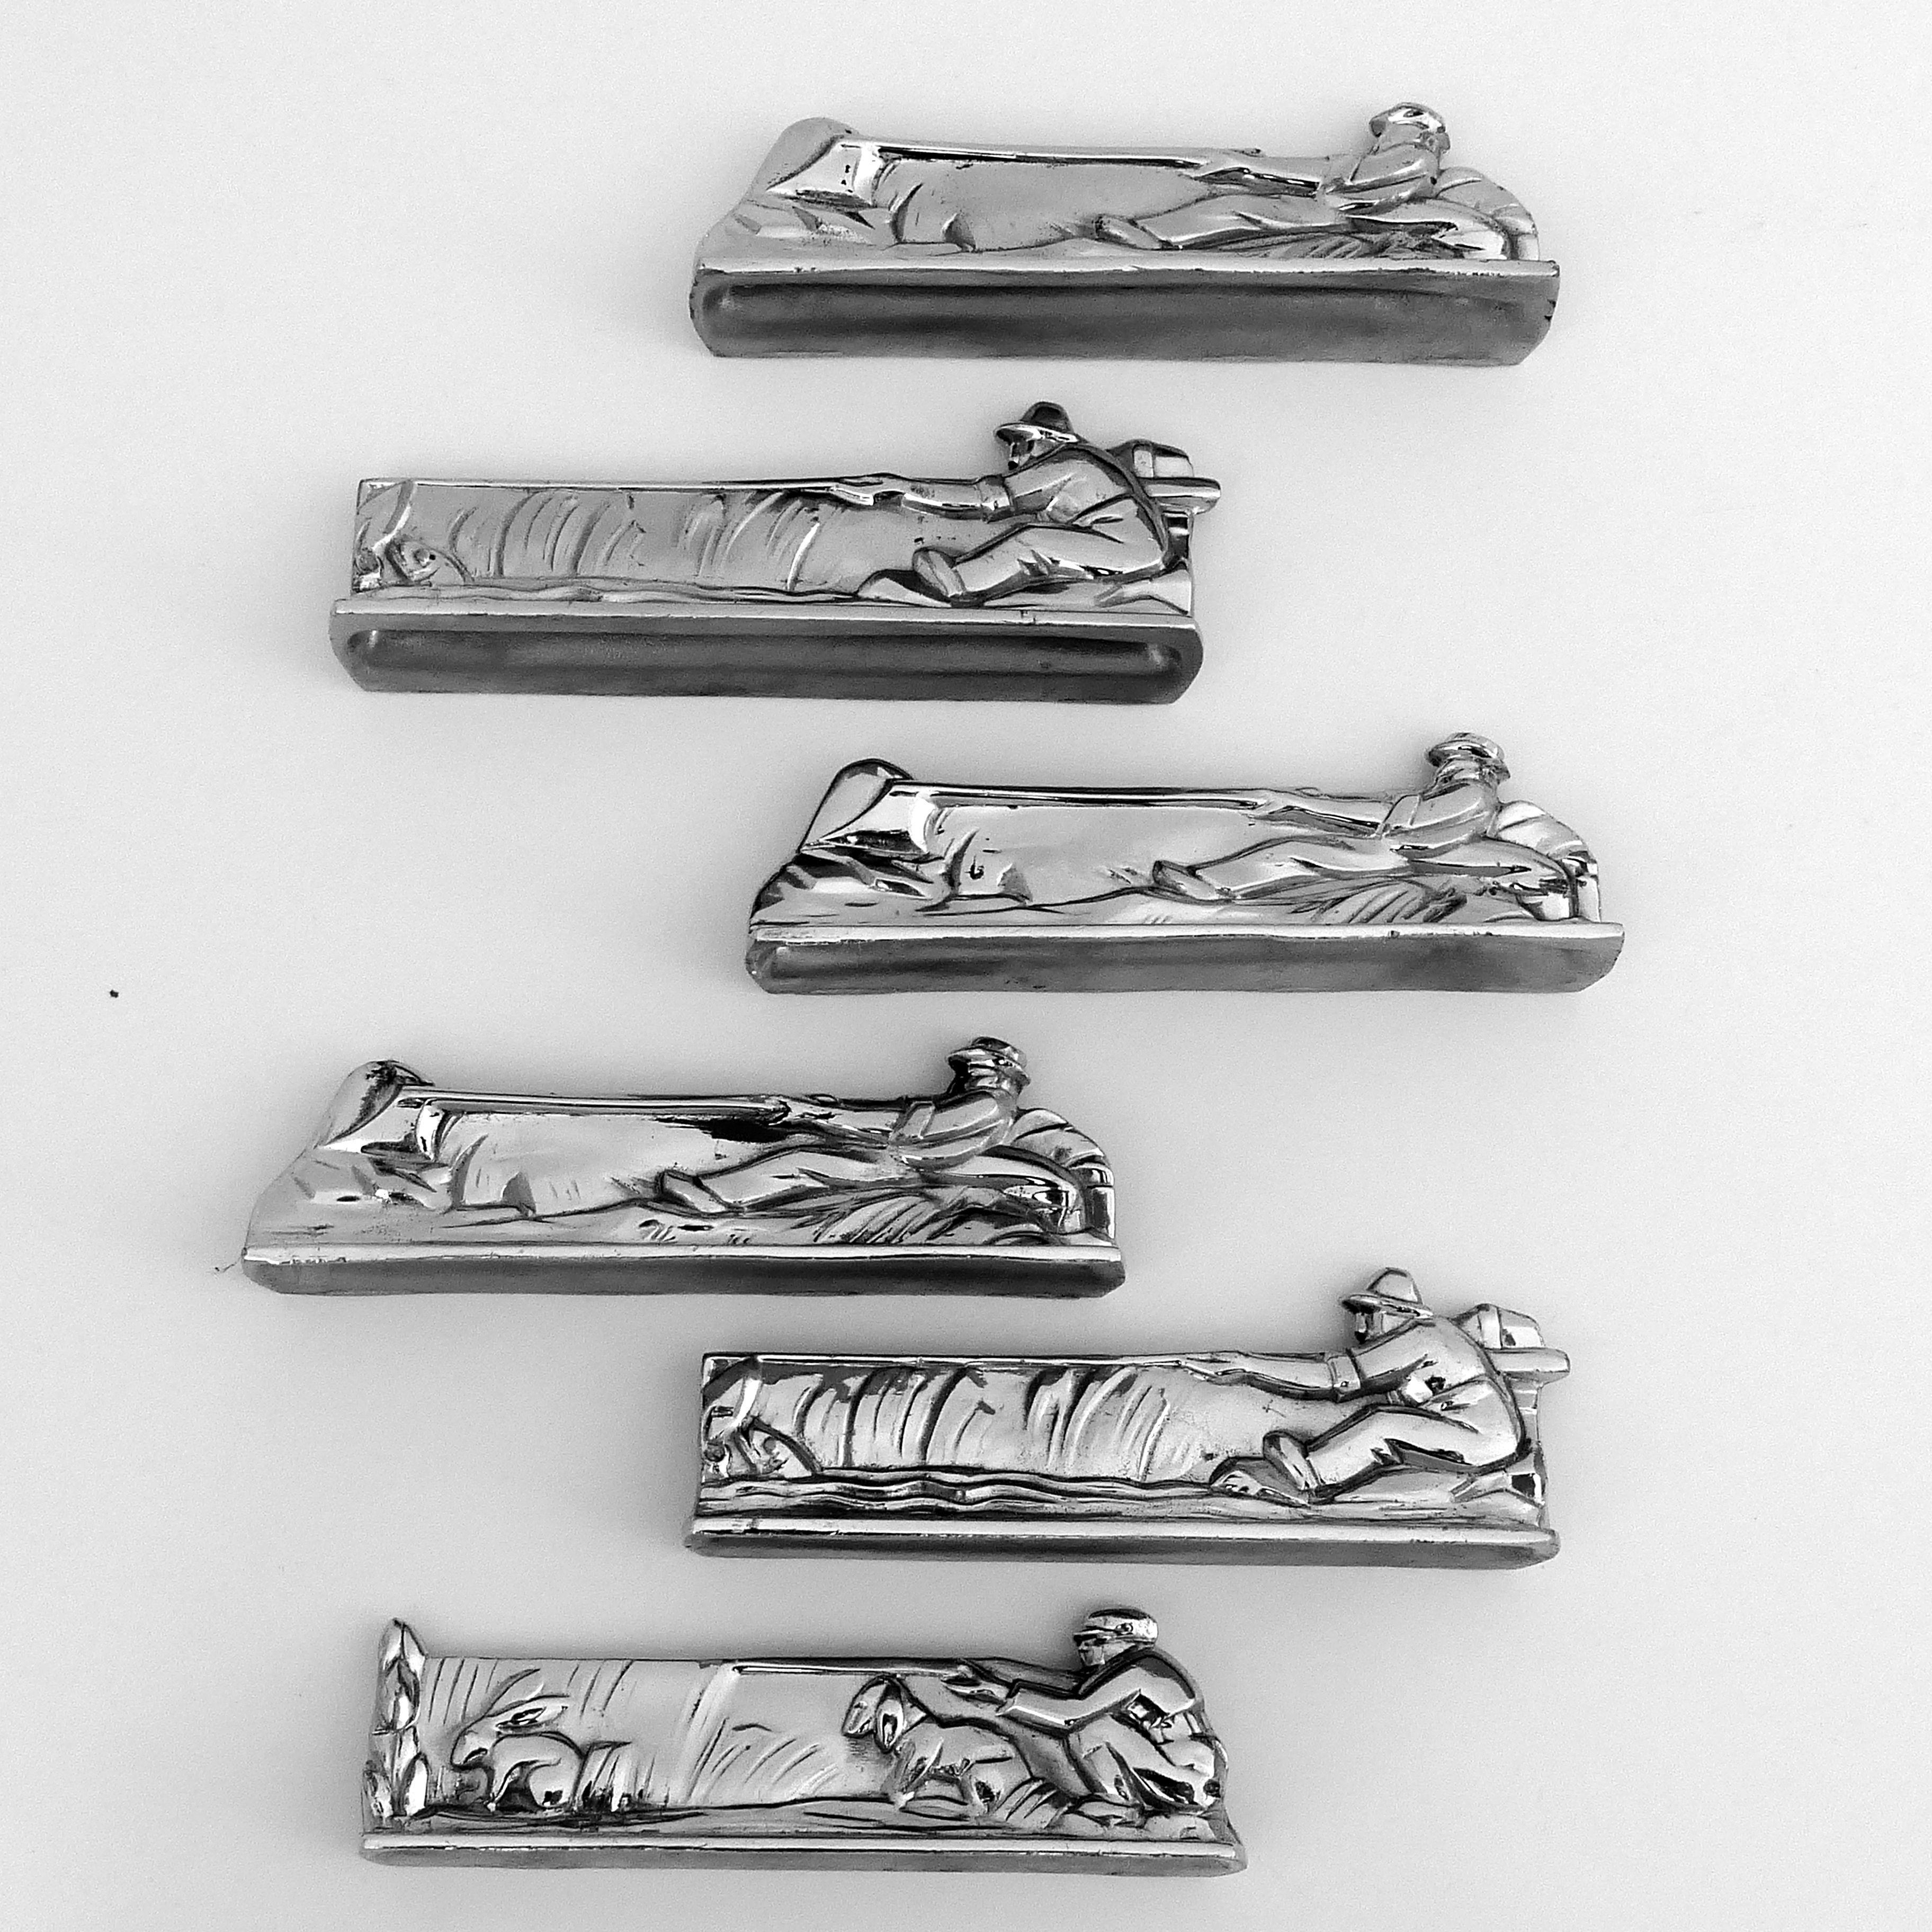 Mid-20th Century French Art Deco Knife Rests Set 12 Pc, Hunter, Fisherman, Farmer, Original Box